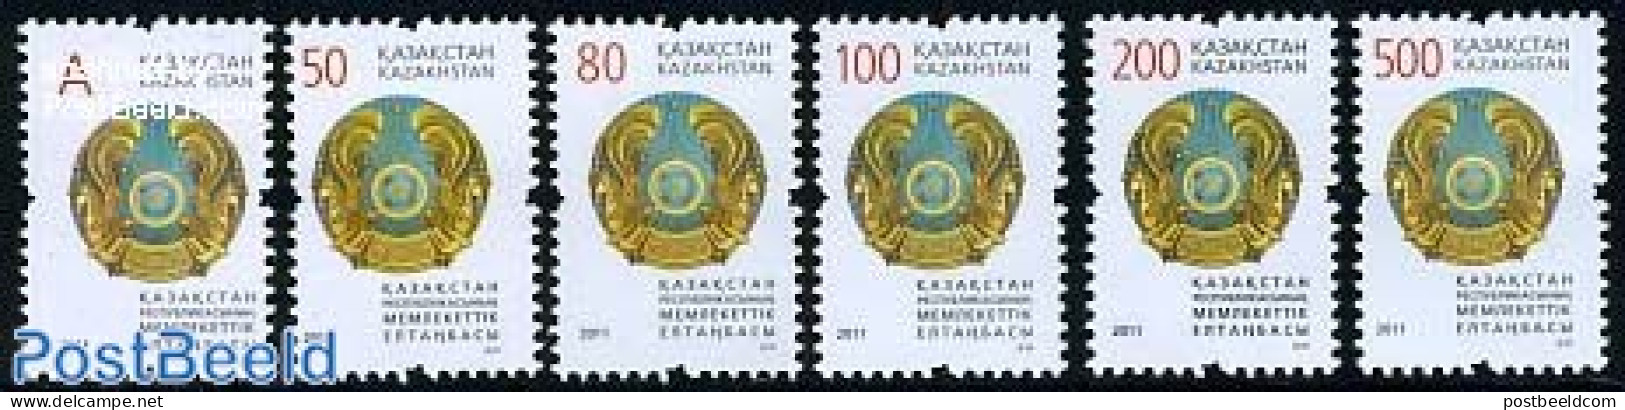 Kazakhstan 2011 Definitives, Coat Of Arms 6v, Mint NH, History - Coat Of Arms - Kasachstan